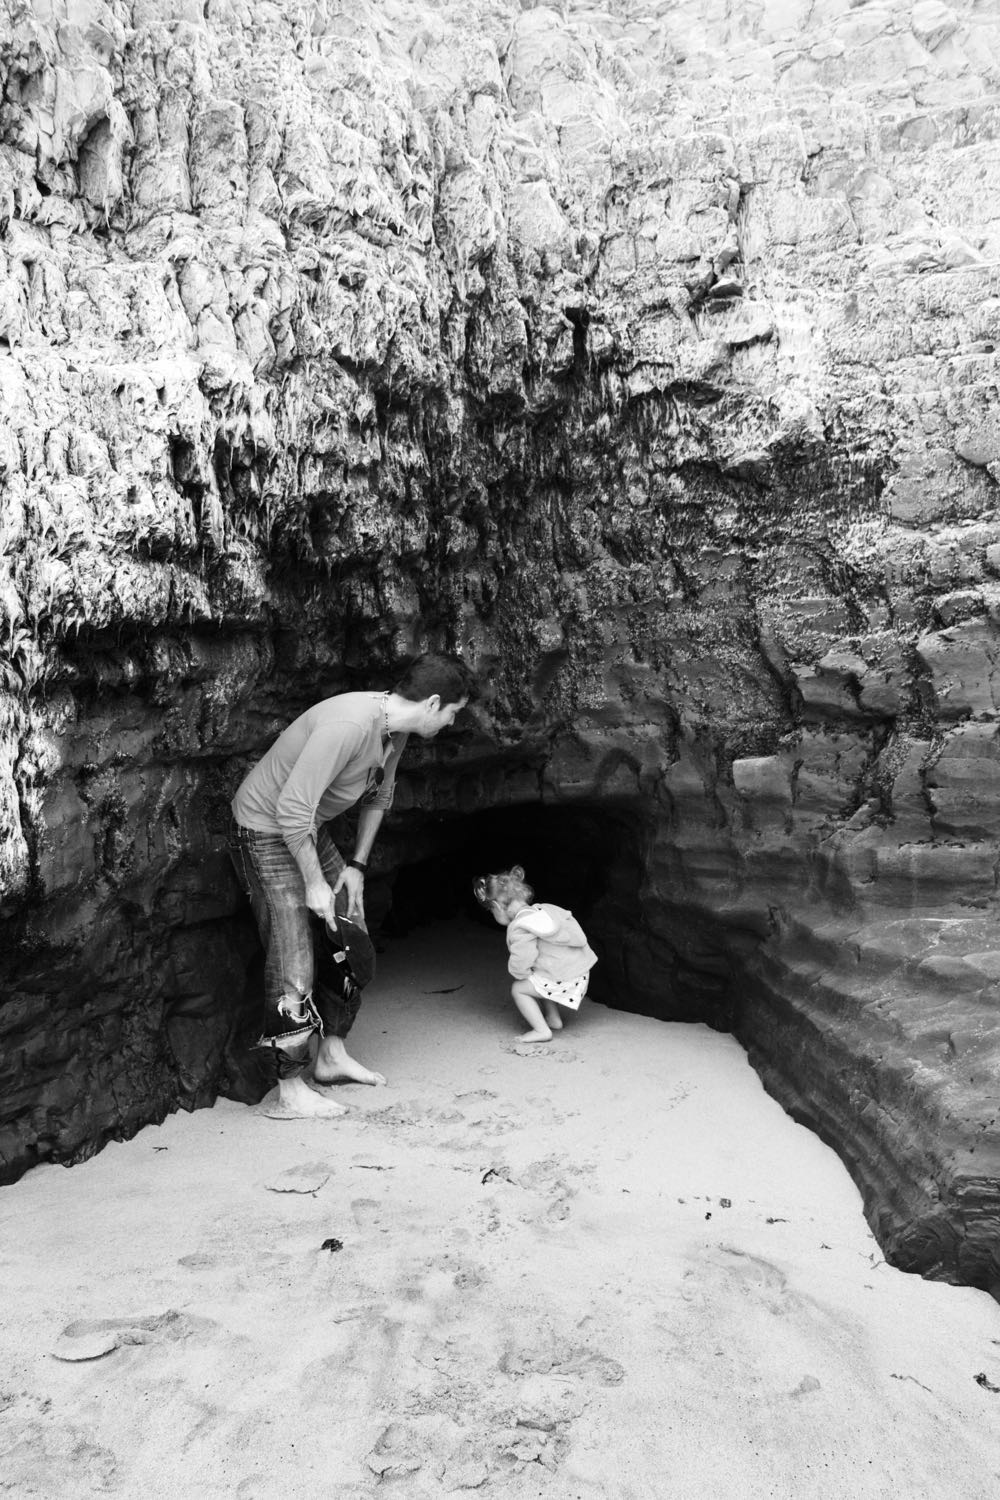 Exploring caves along the California coast